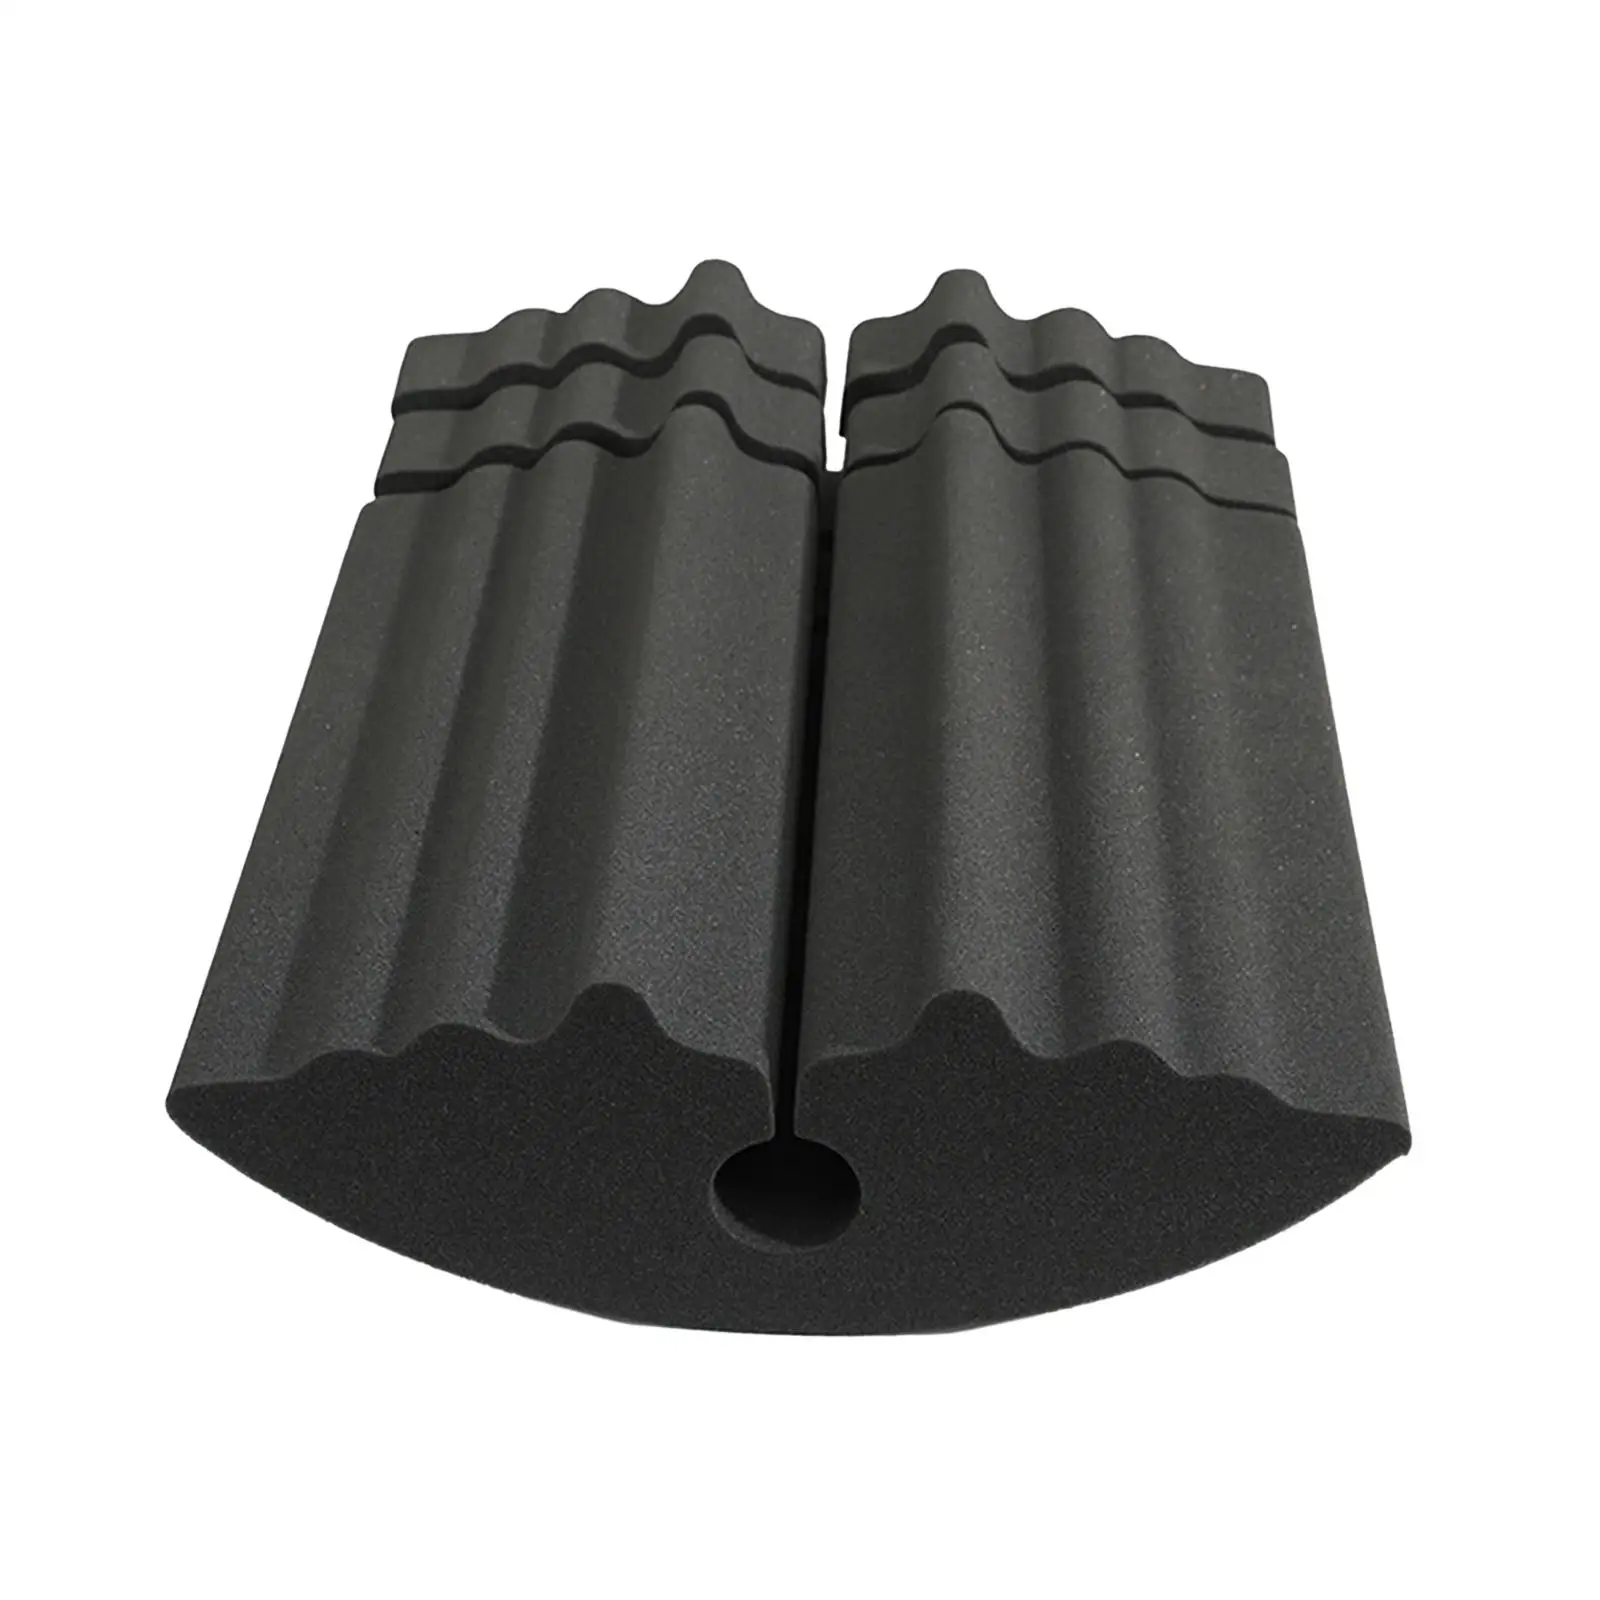 Acoustic Foam Treatment Sound Insulation Cushion Drum Sound Mutes Tone Control